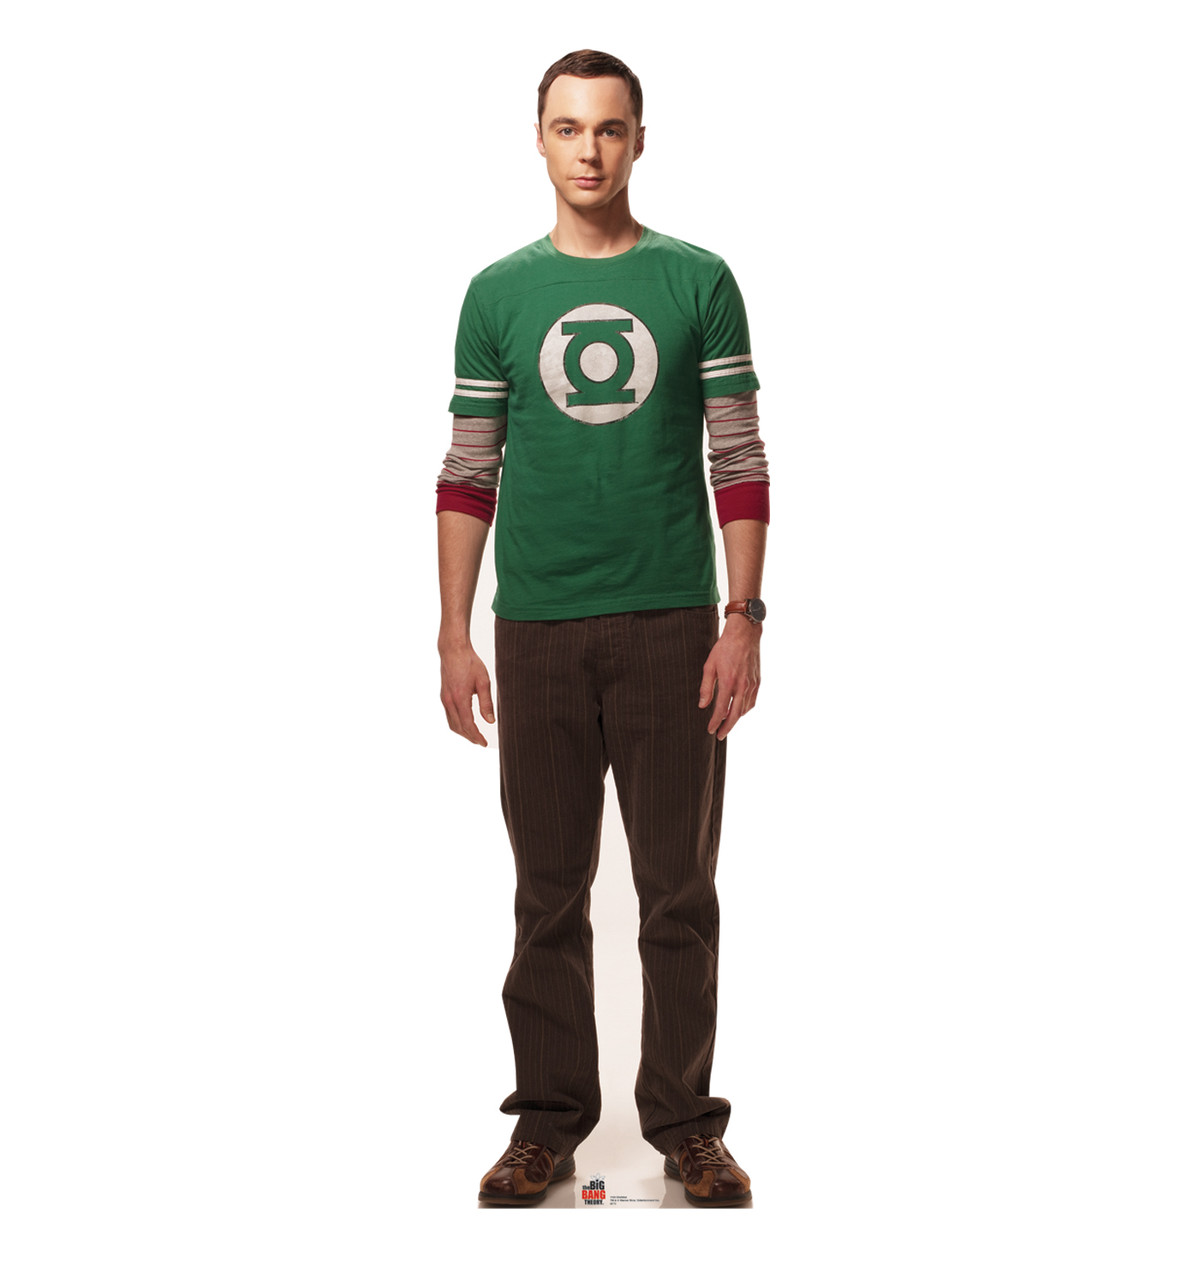 Sheldon (Big bang Theory)